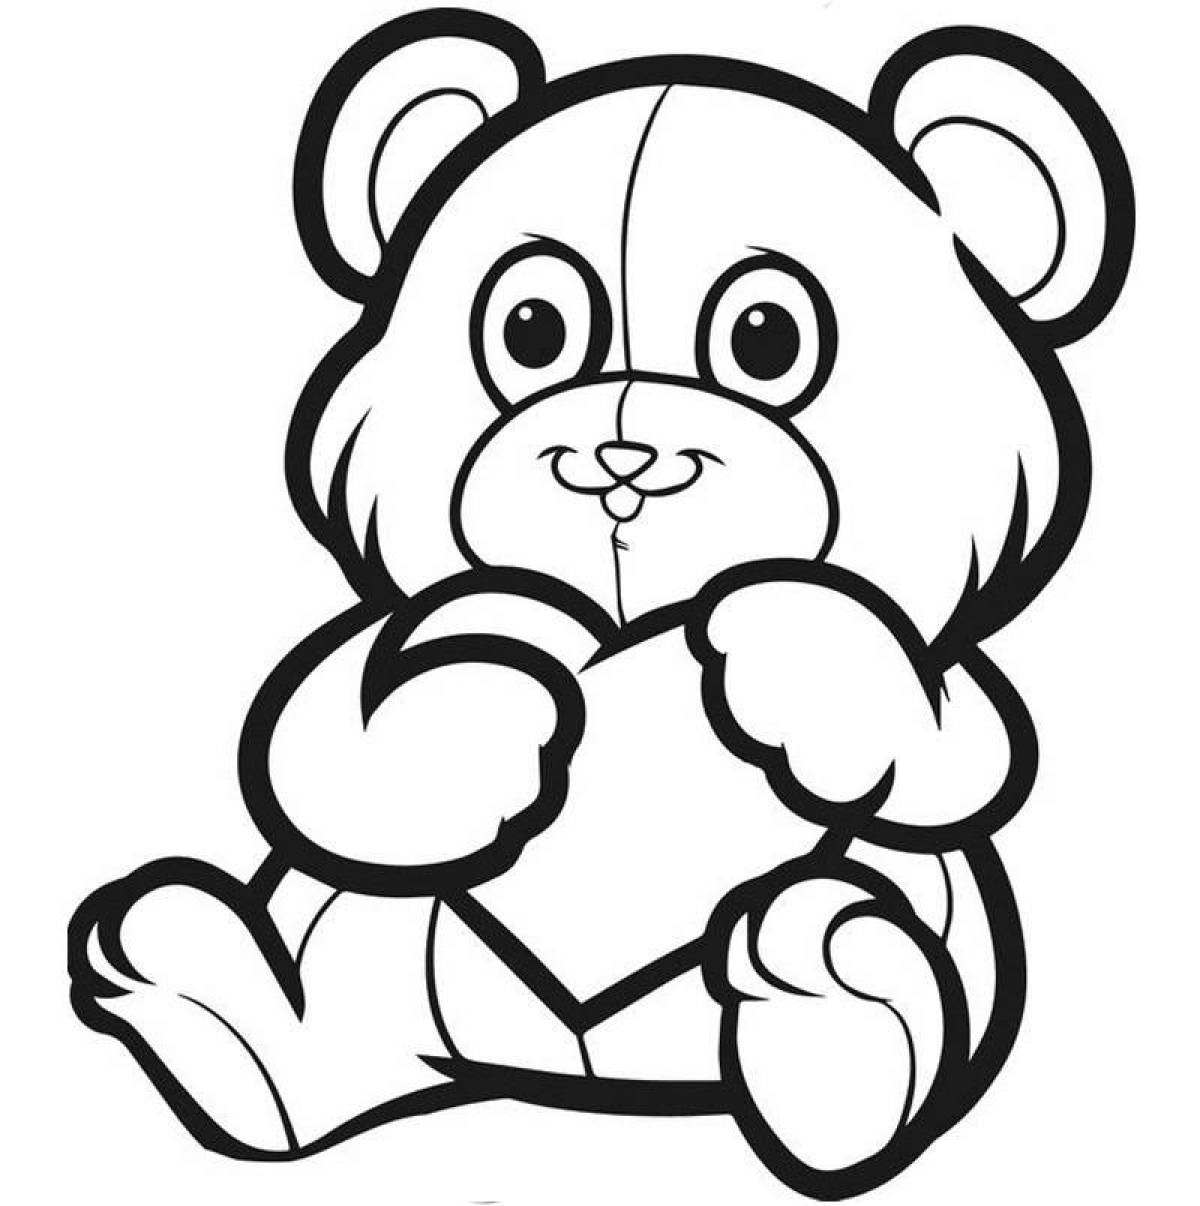 Adorable teddy bear with heart coloring book